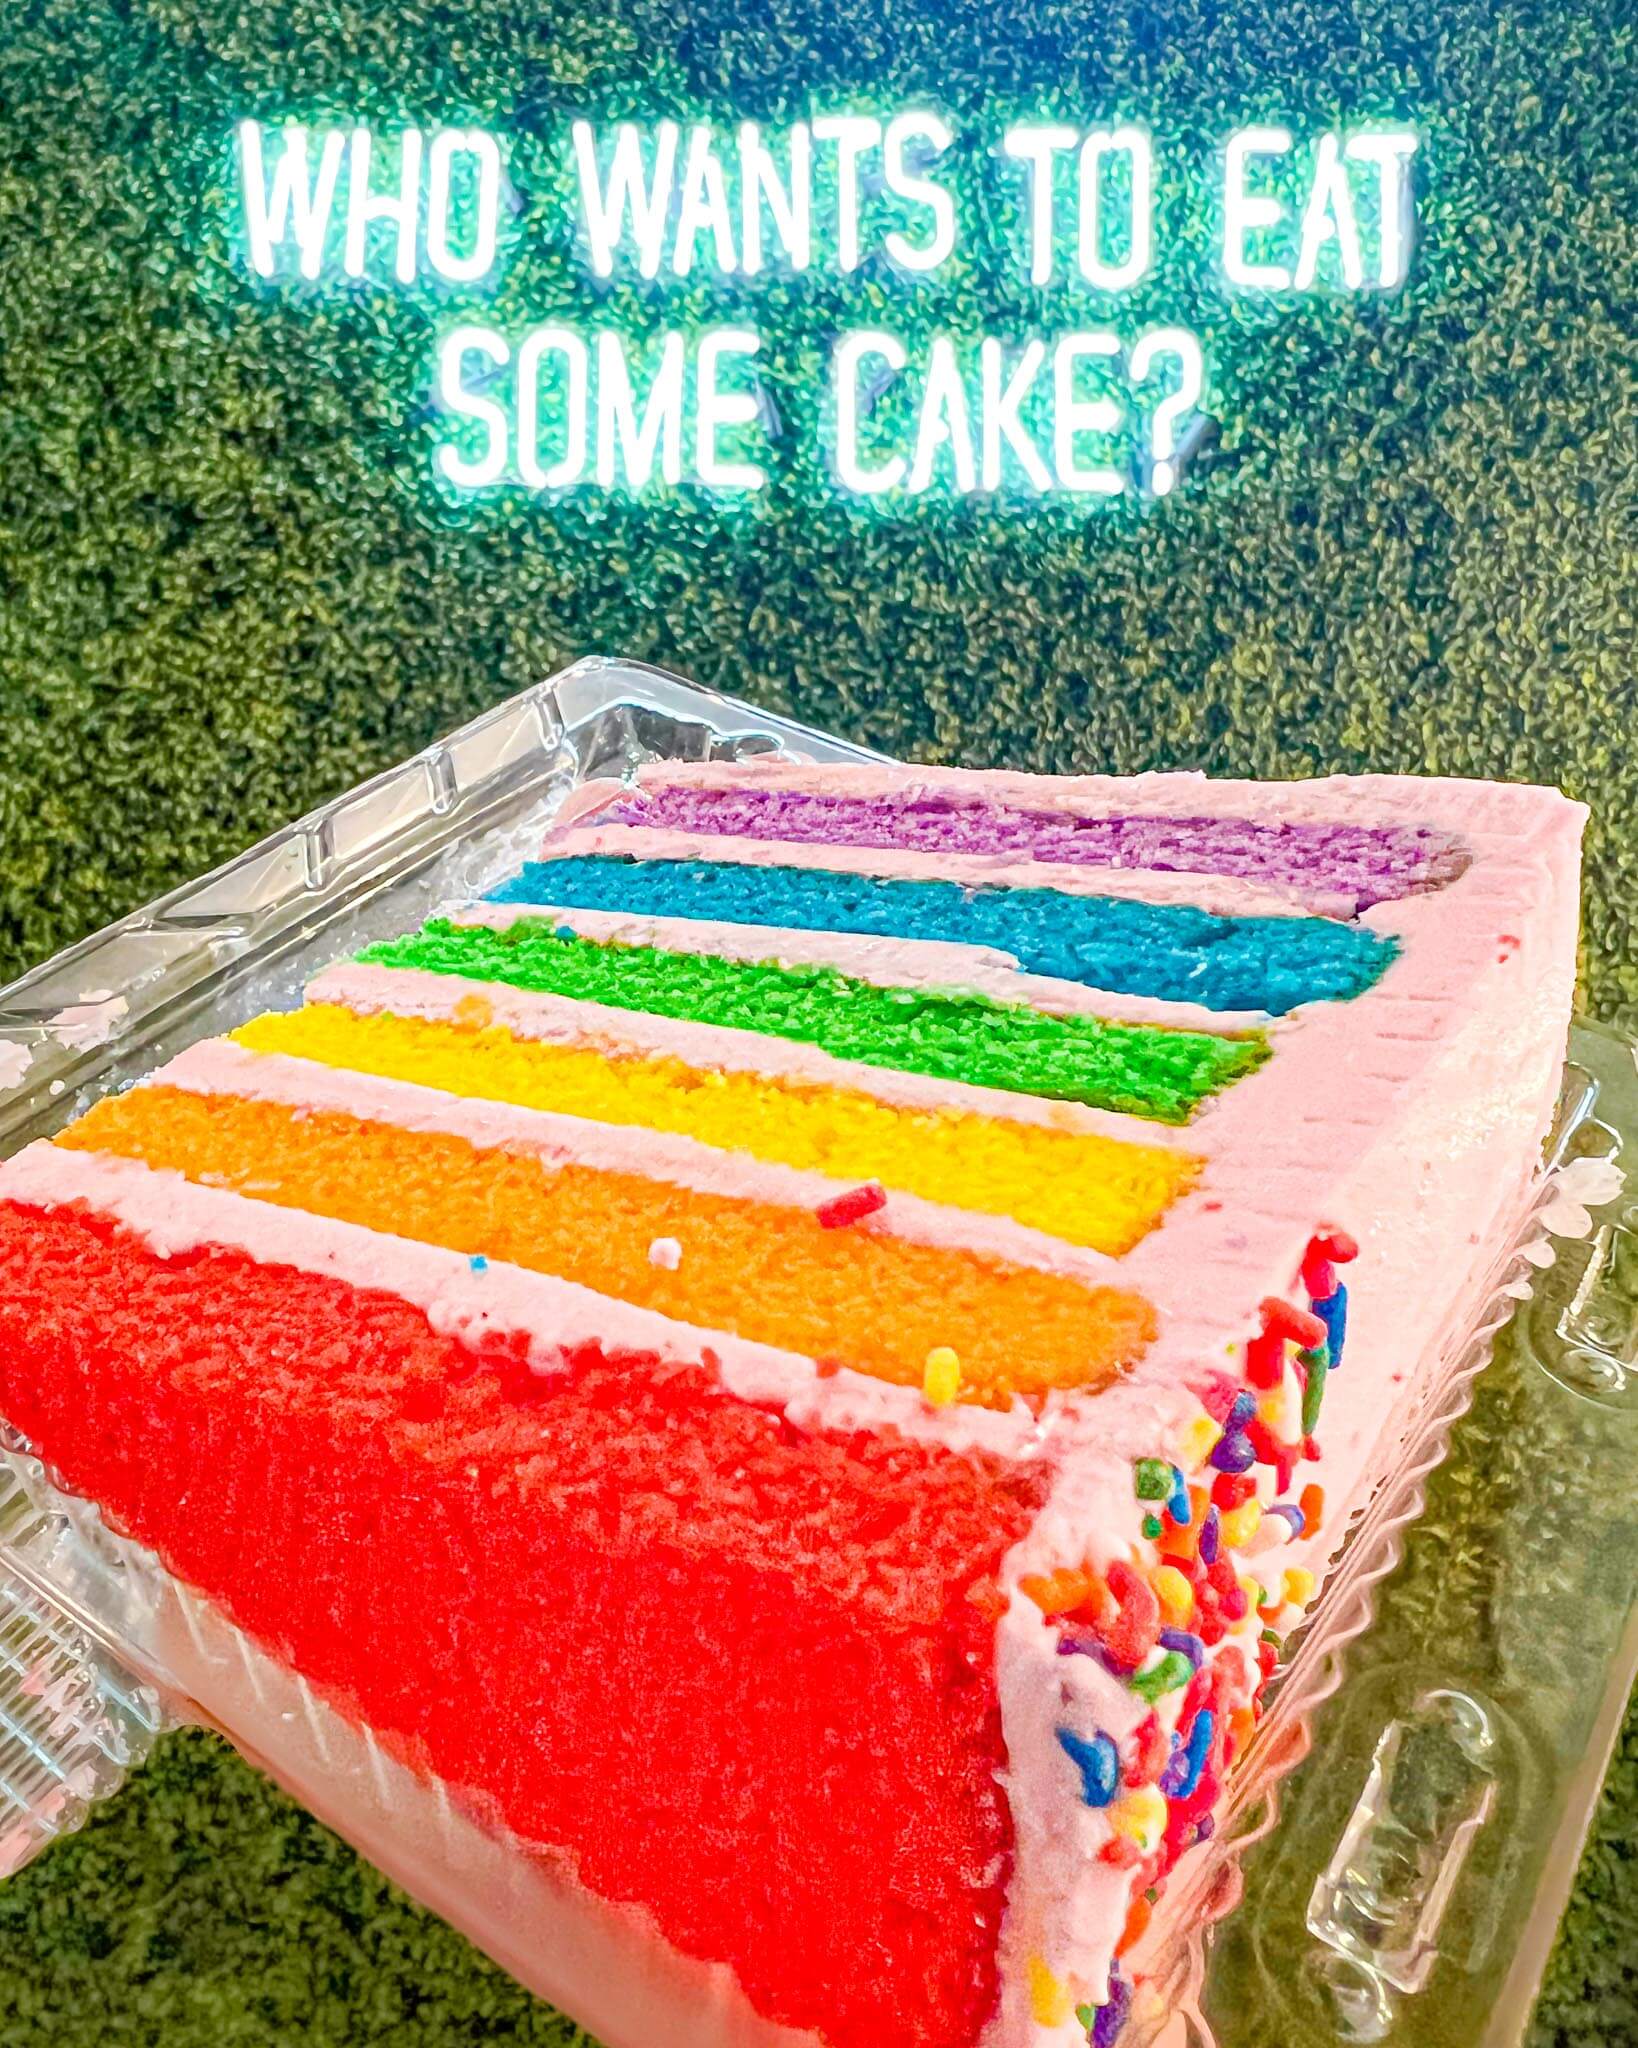 Carlo's Bakery Birthday Strawberry Rainbow Cake Slice